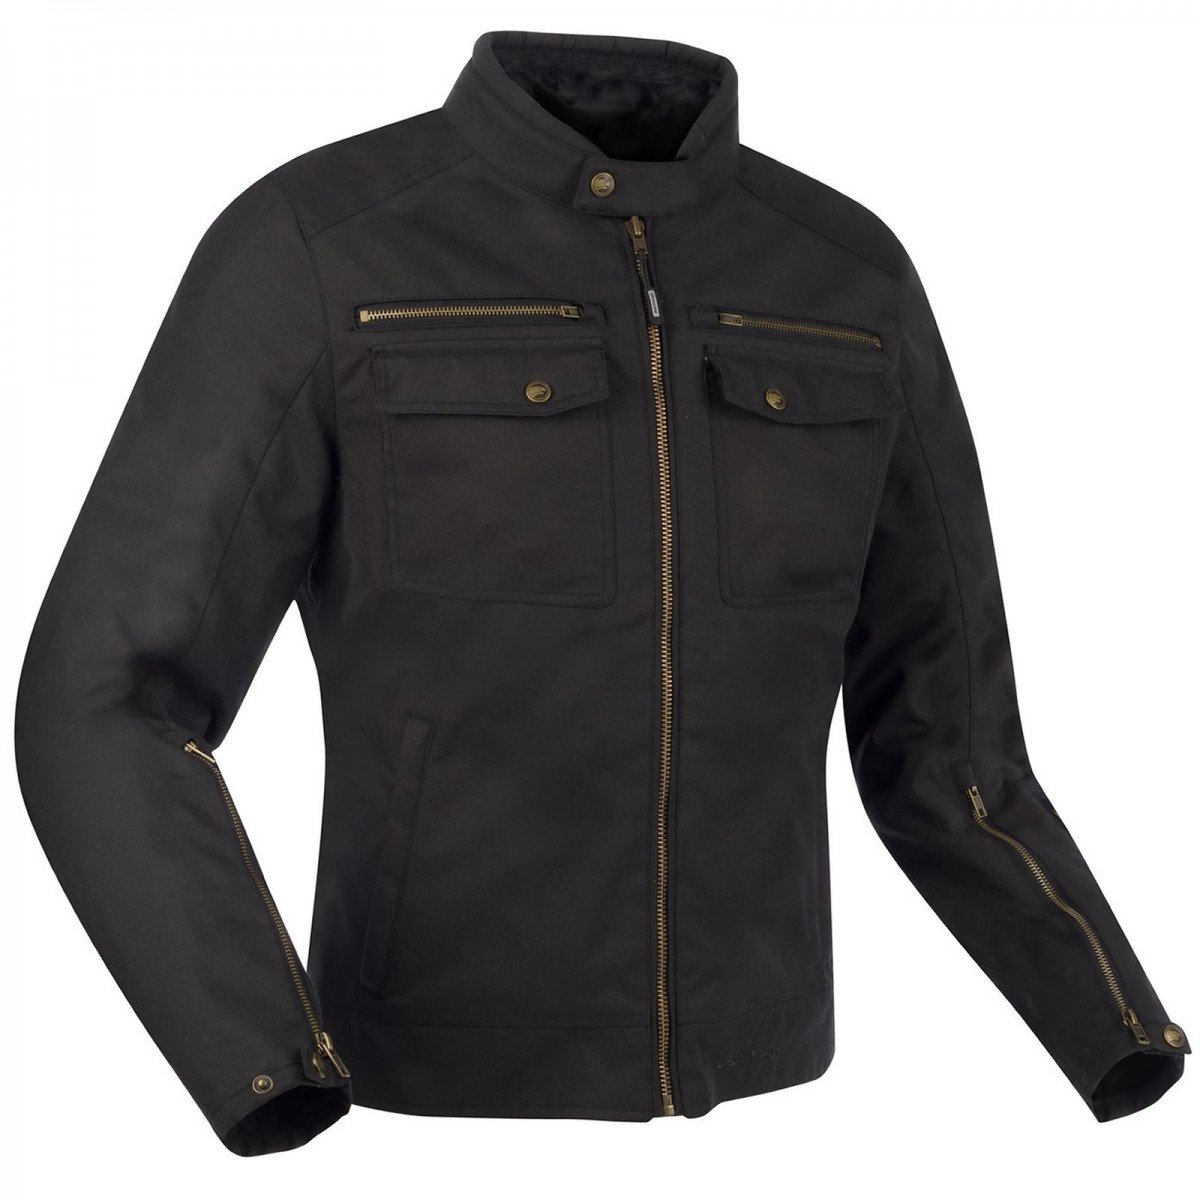 Image of Bering Winton Jacket Black Size 2XL ID 3660815161968